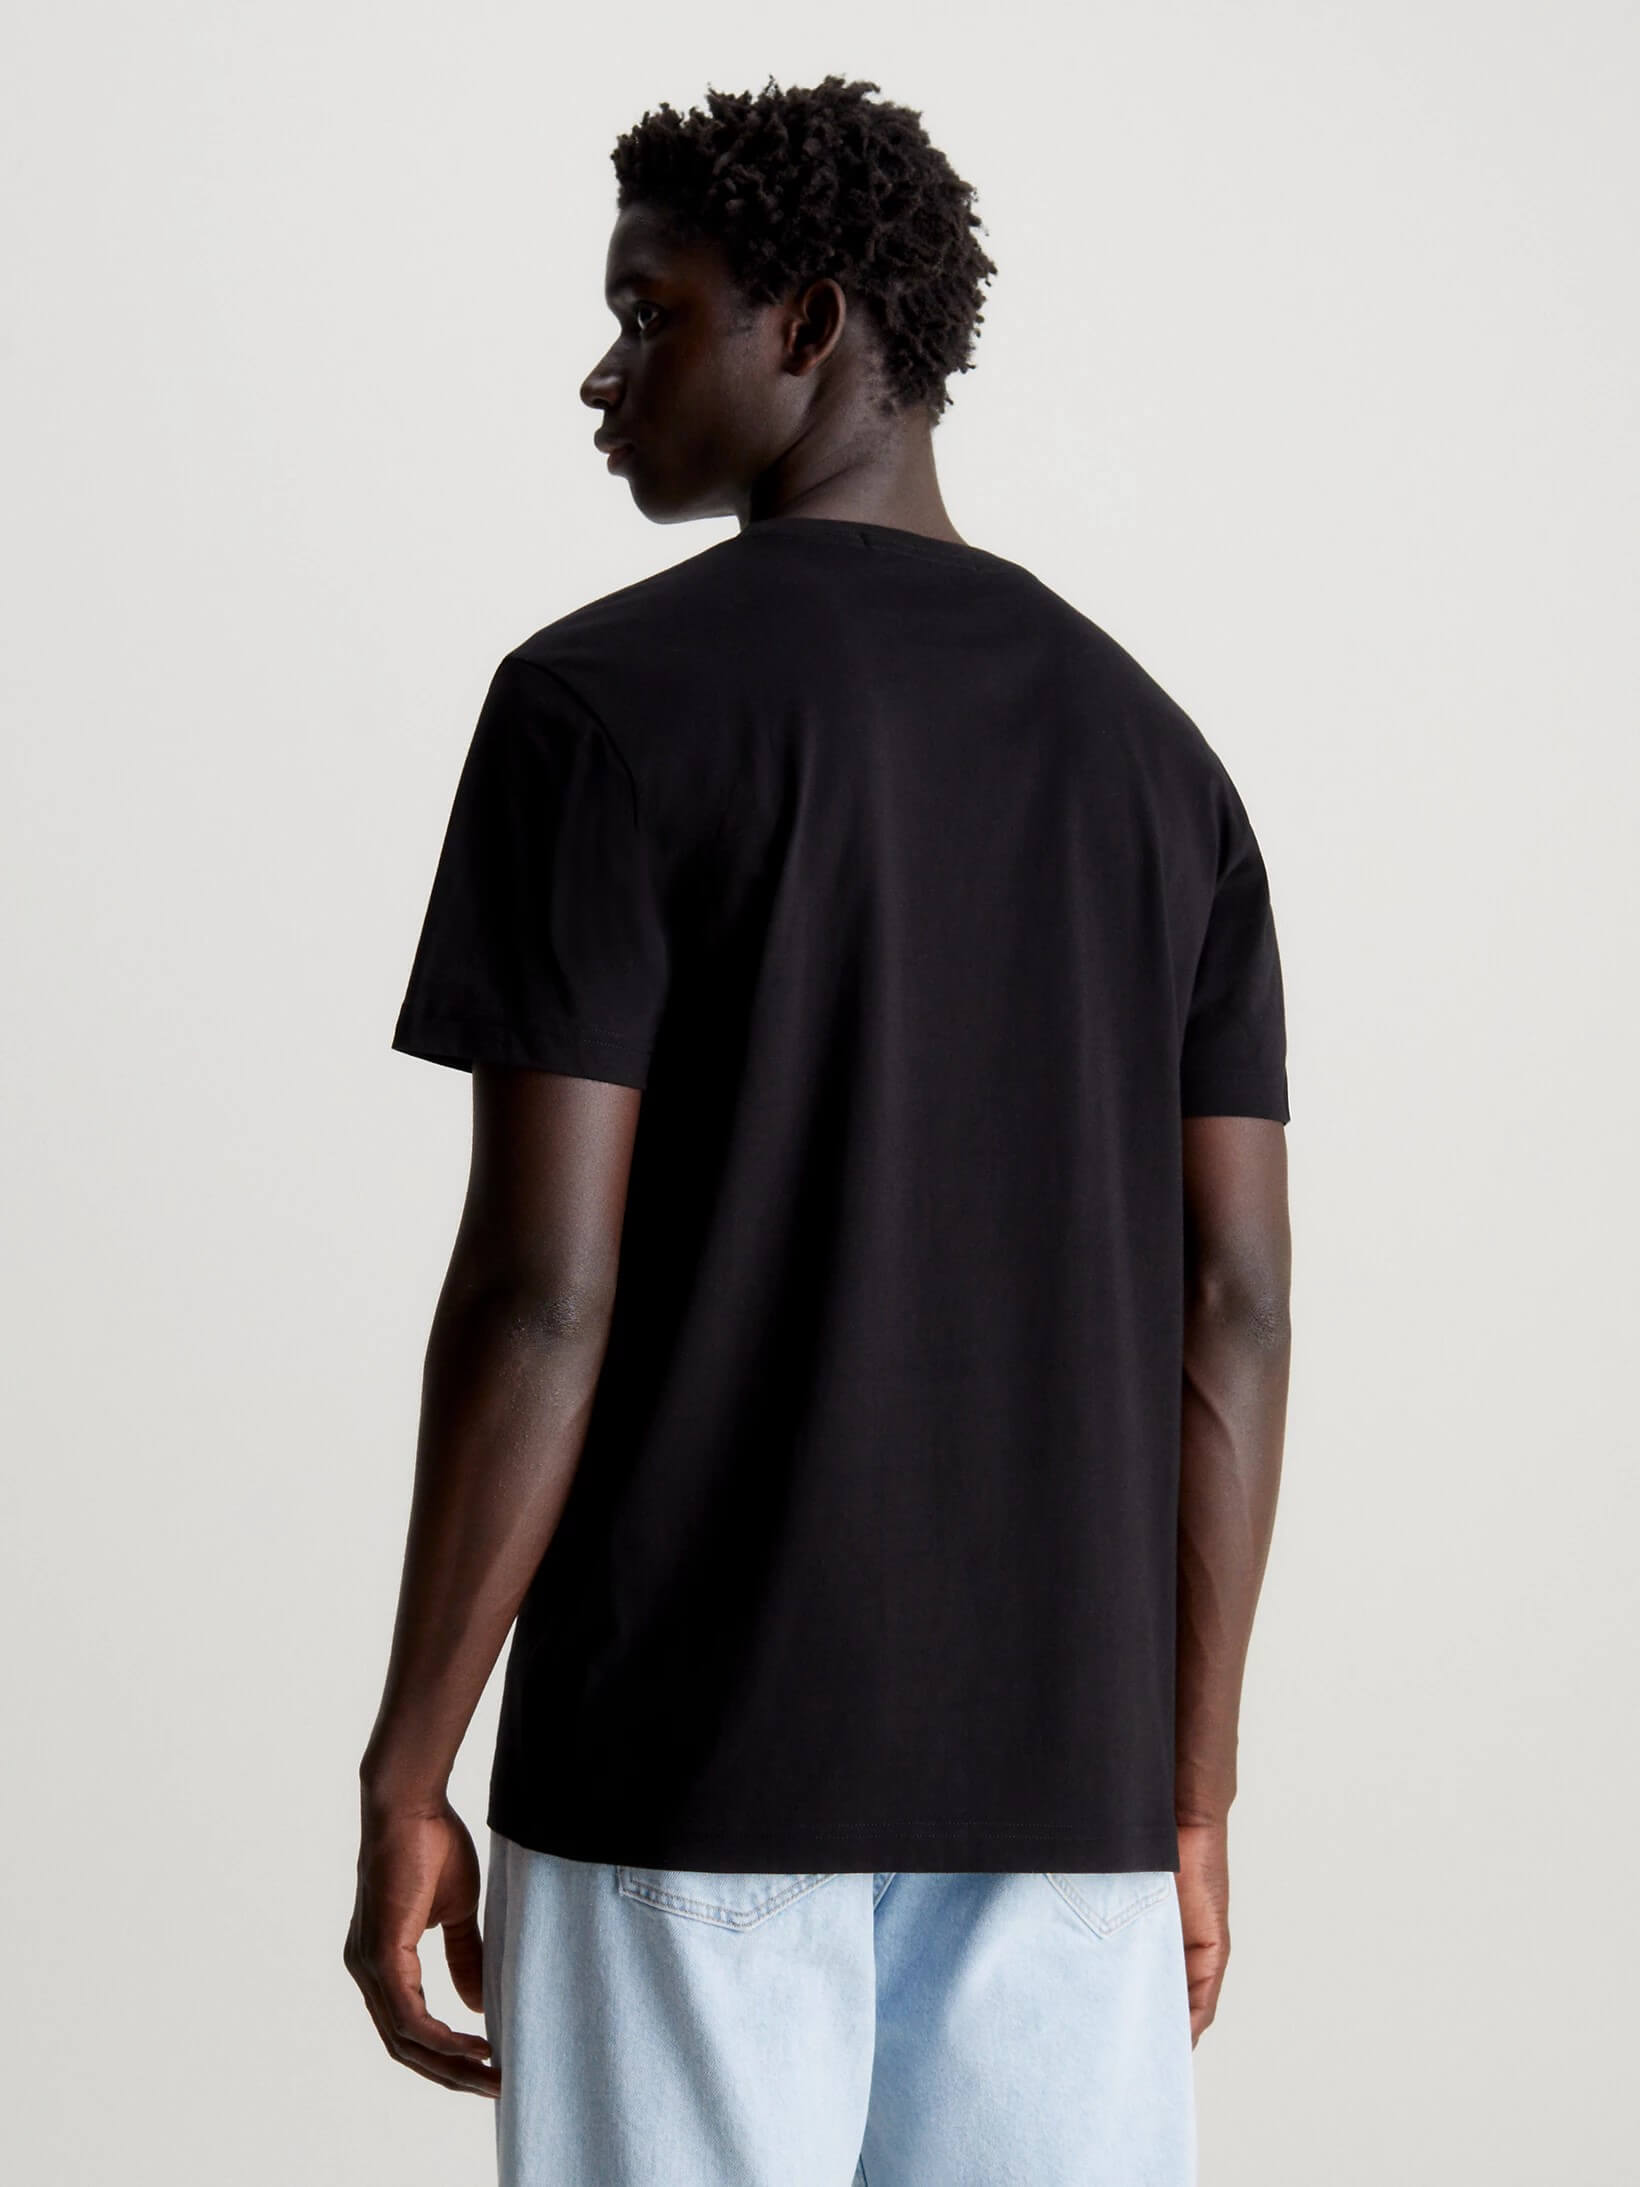 Playera Calvin Klein Diseño Estampado Hombre Negro